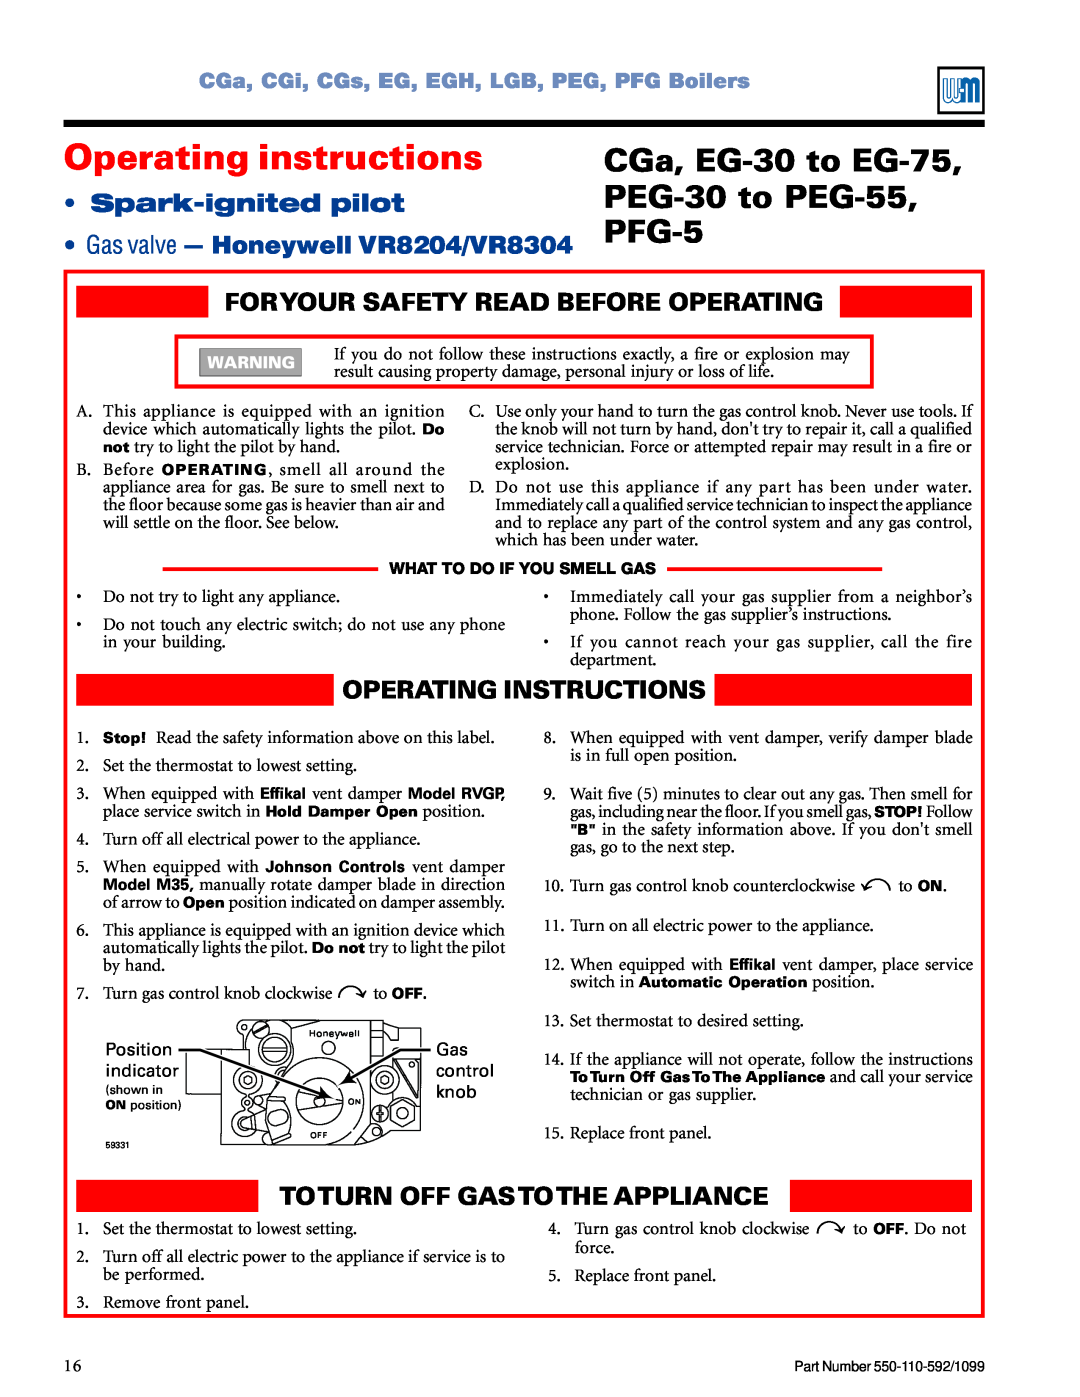 Weil-McLain manual Operating instructions, CGa, EG-30to EG-75, PEG-30to PEG-55, PFG-5, Spark-ignitedpilot 